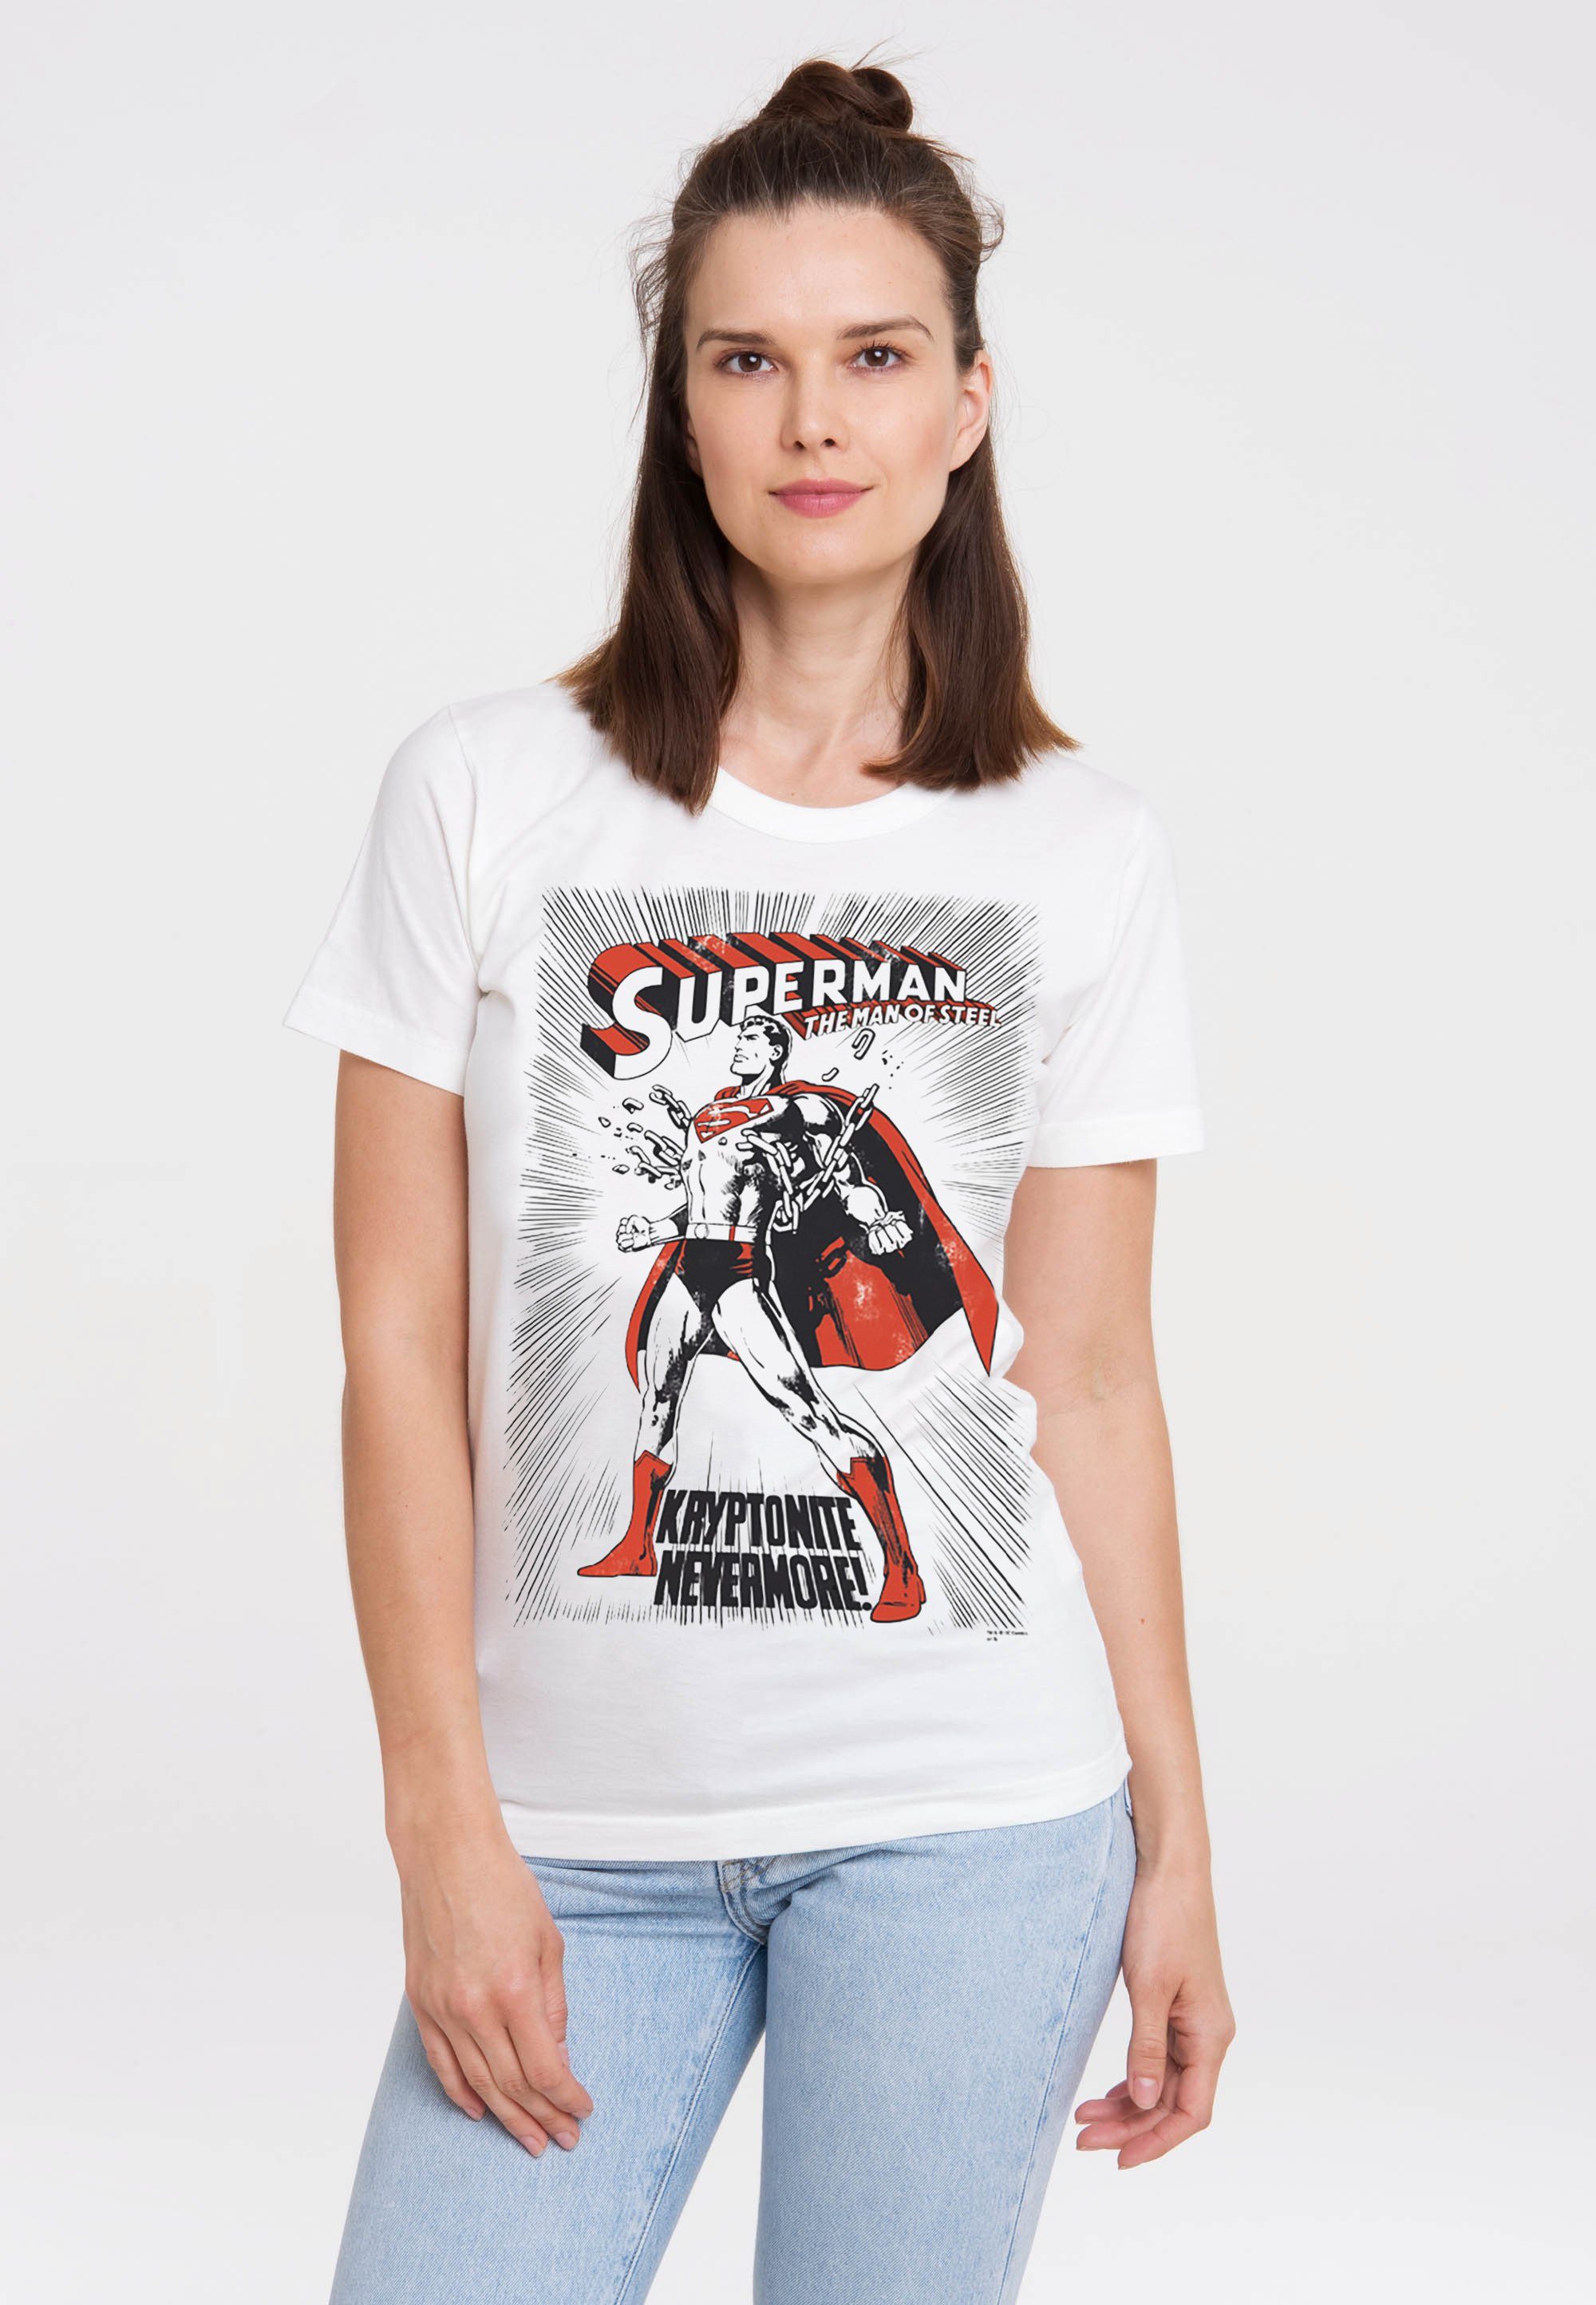 LOGOSHIRT T-Shirt Superman Kryptonite Superhelden-Print trendigem mit